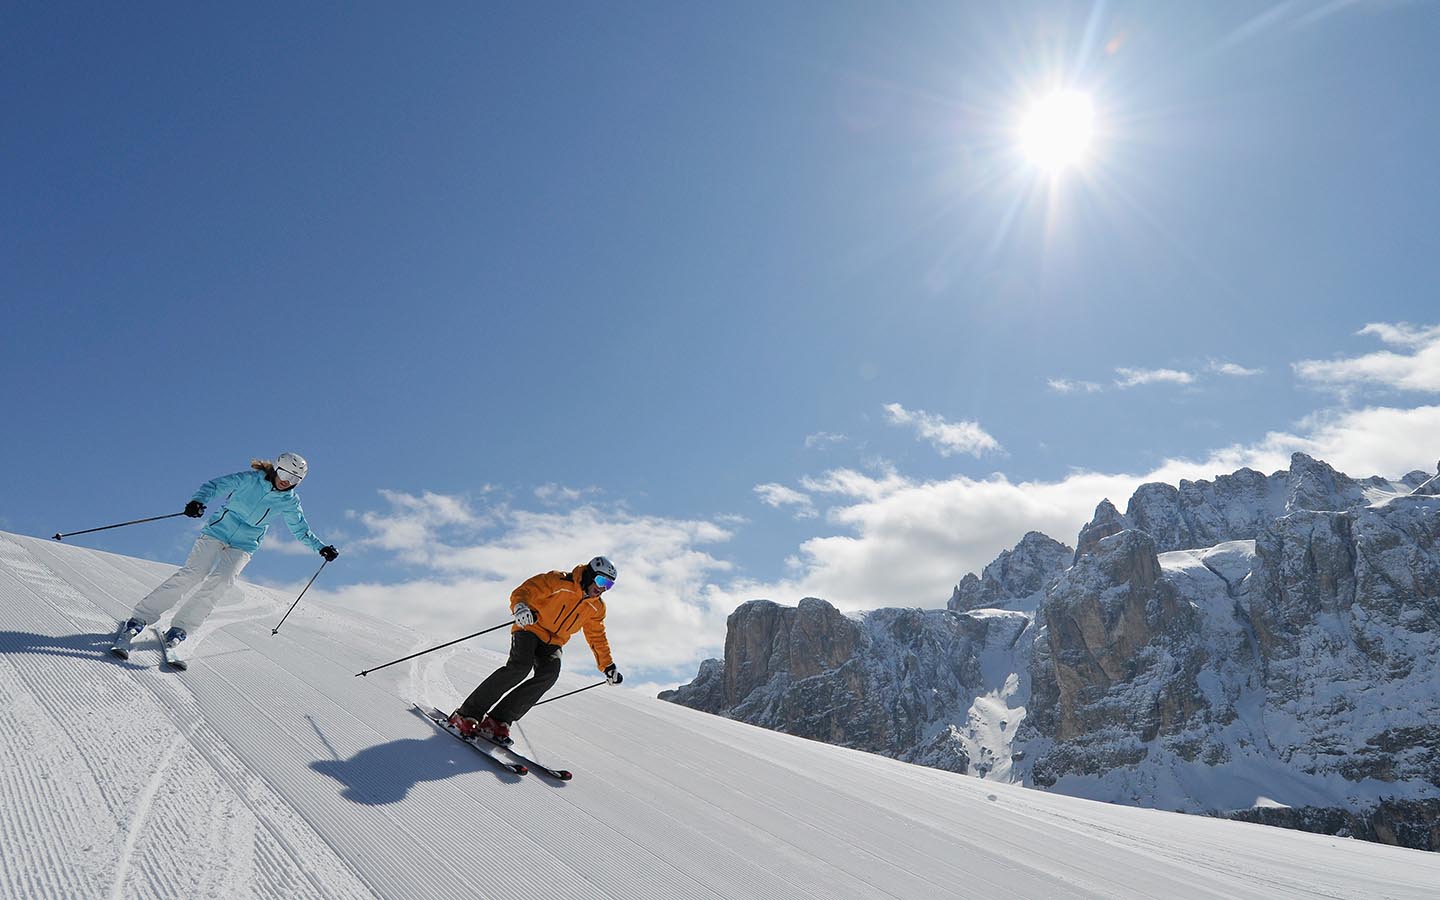 Ski slope Dantercepies - Dolomiti Superski